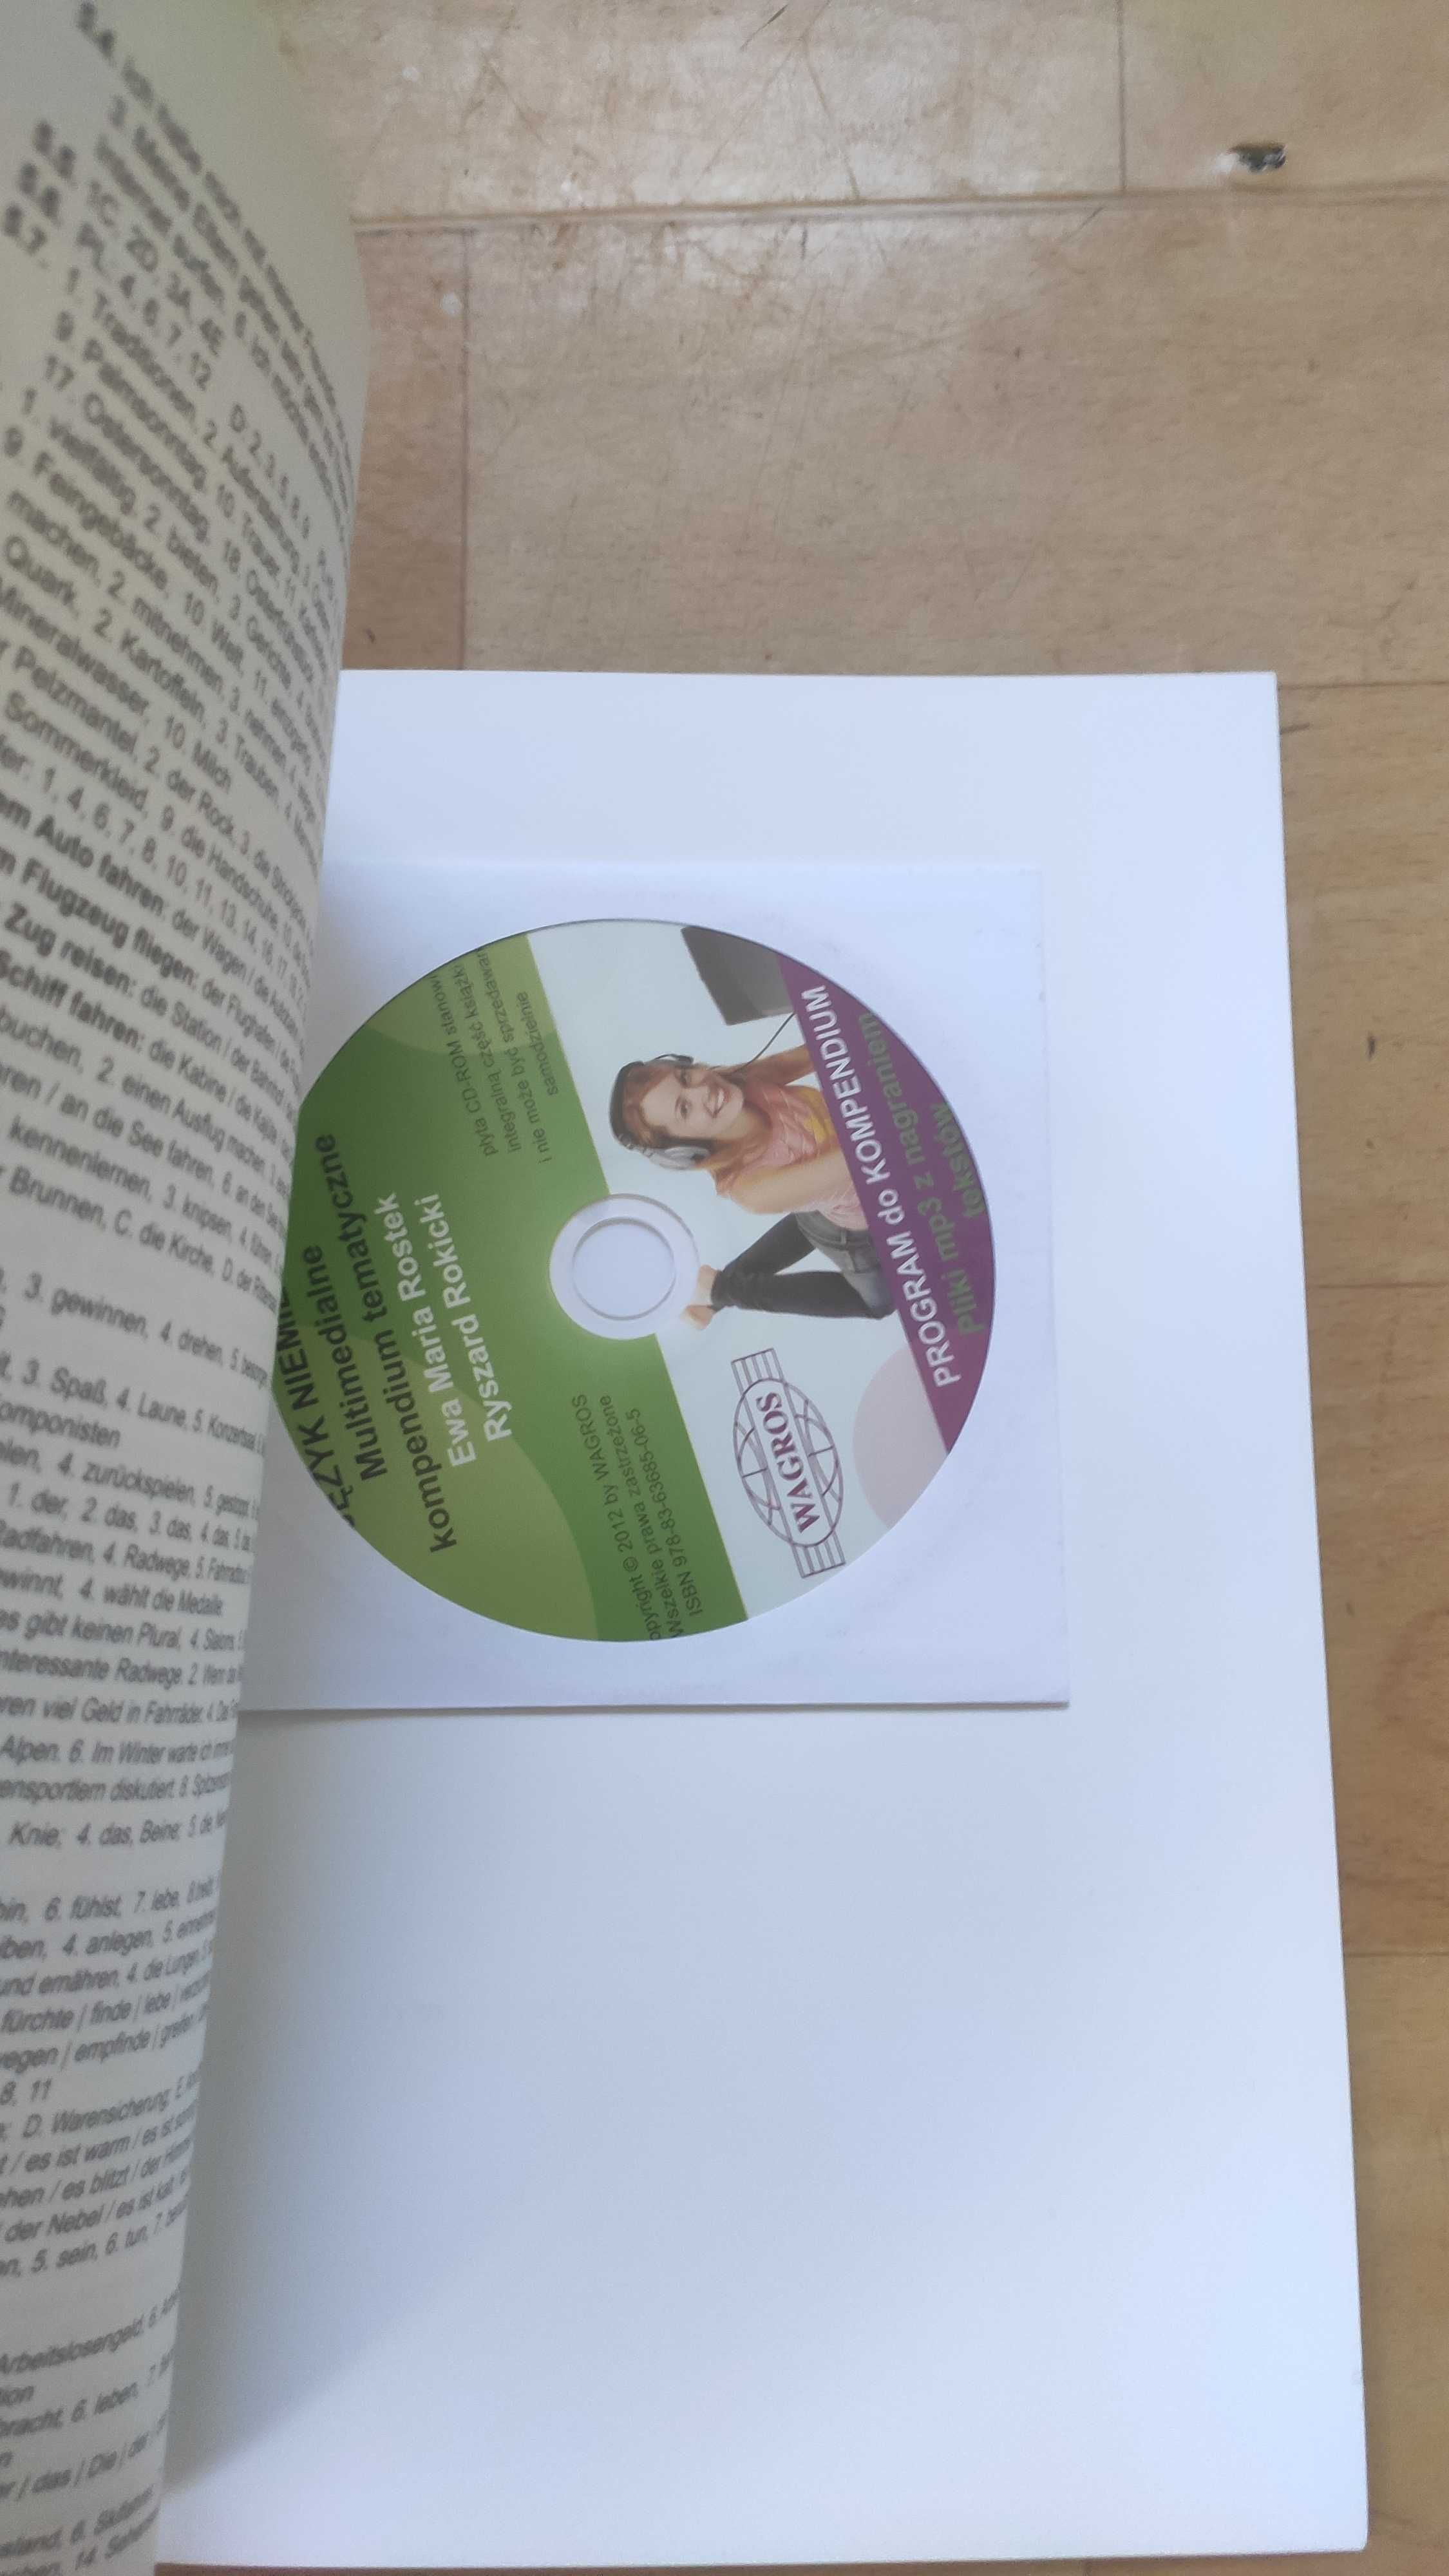 Multimedialne kompendium tematyczne Rostek Niemiecki CD